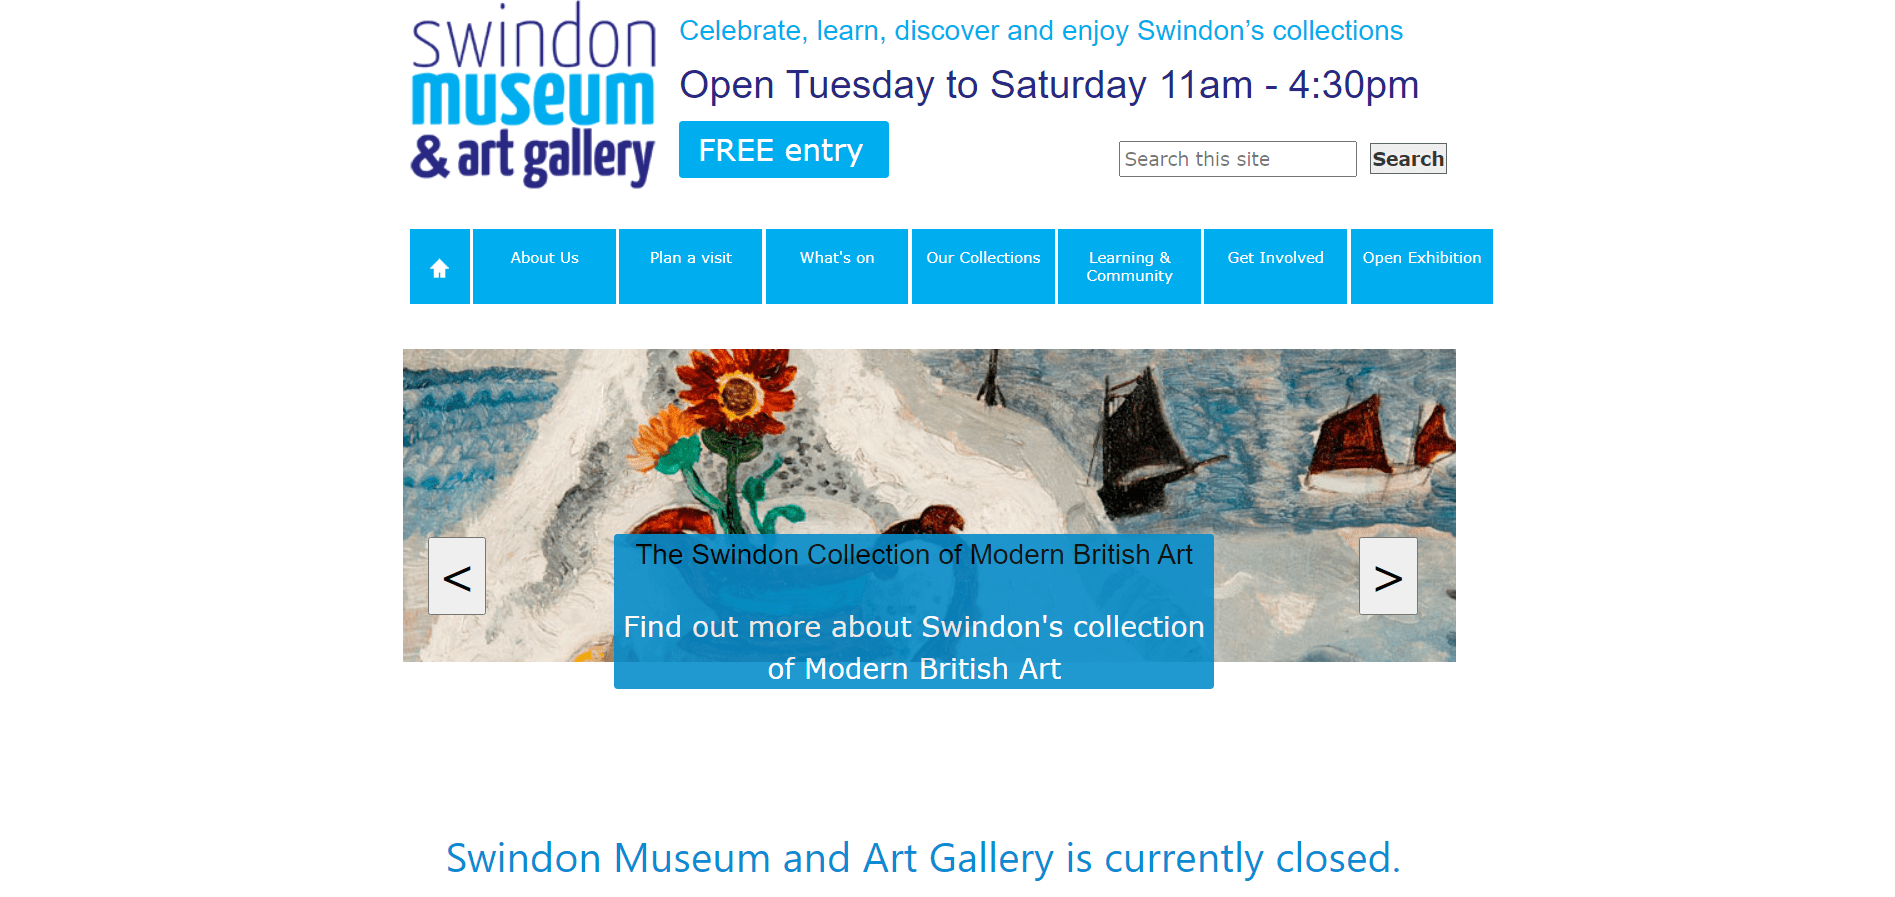 Visit Swindon Museum & Art Gallery